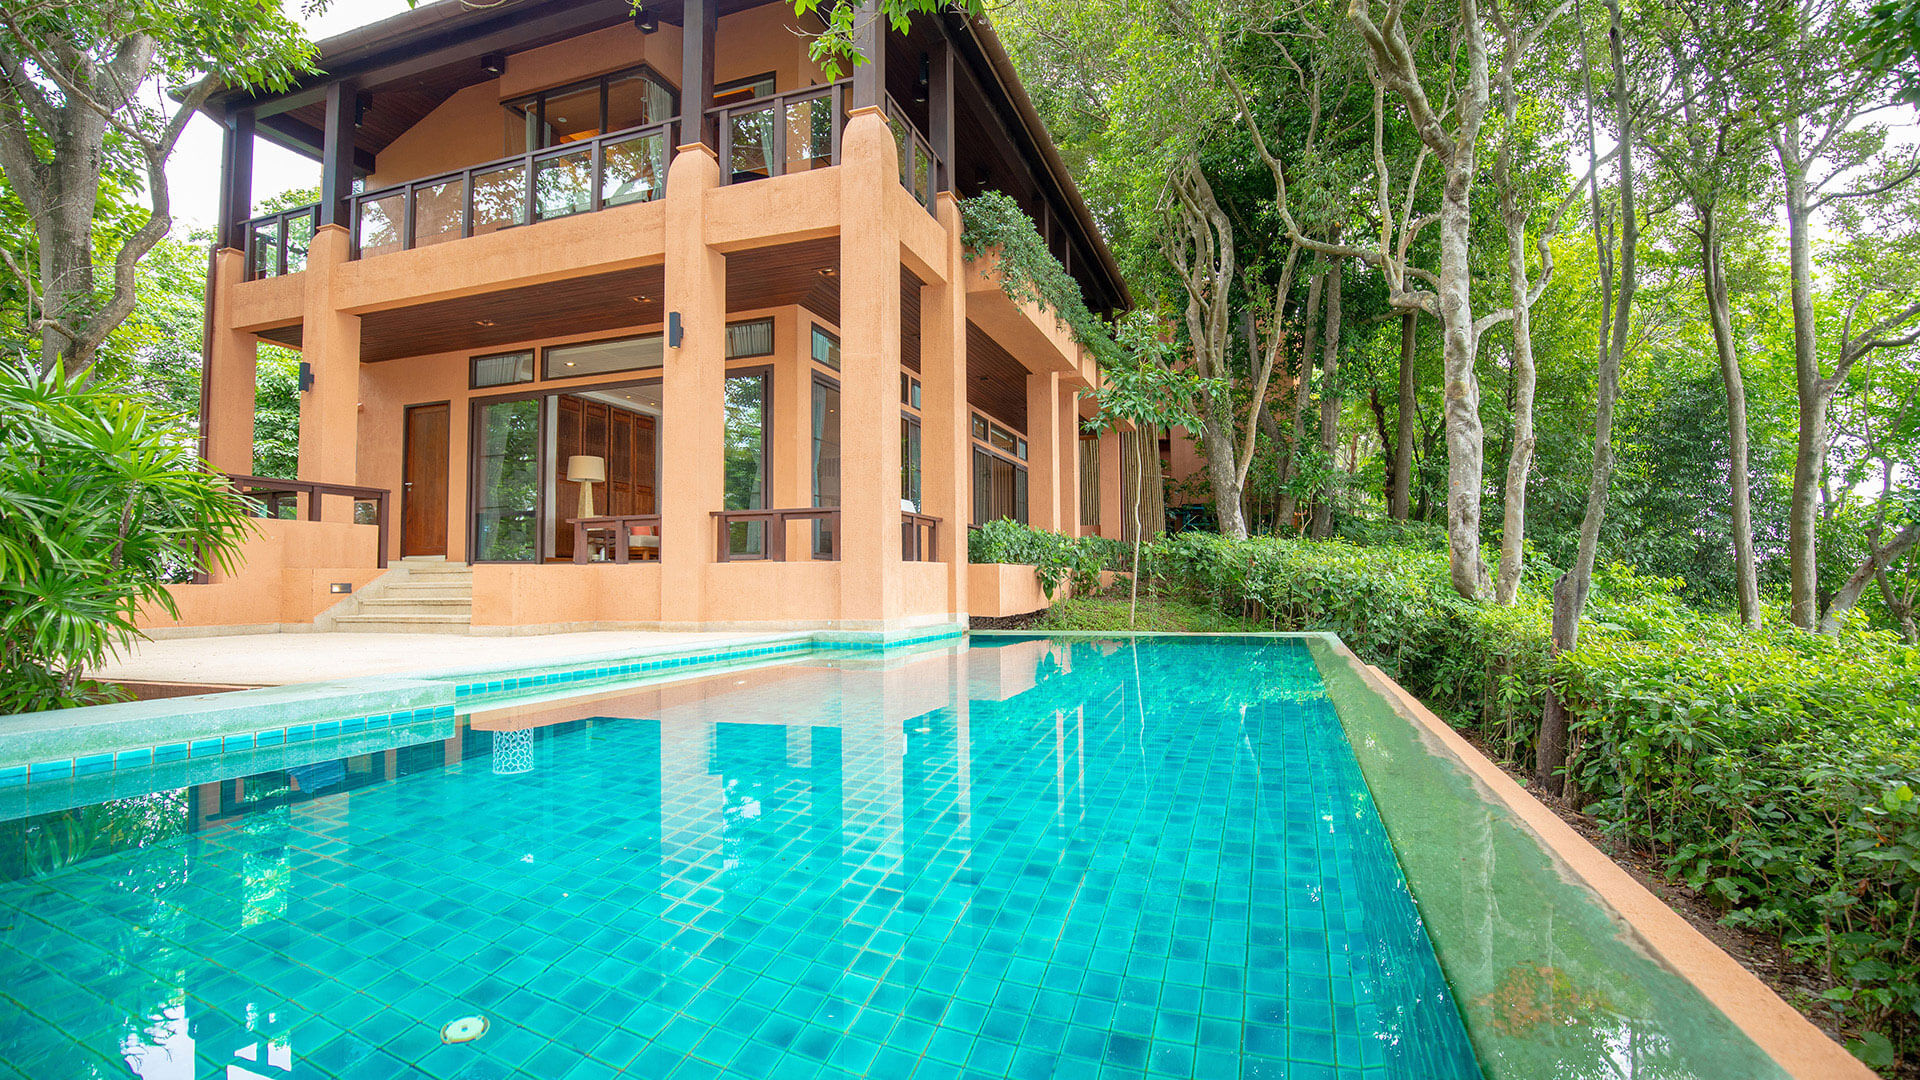 3 bedroom residence villa partial tropical garden view luxury hotel resort